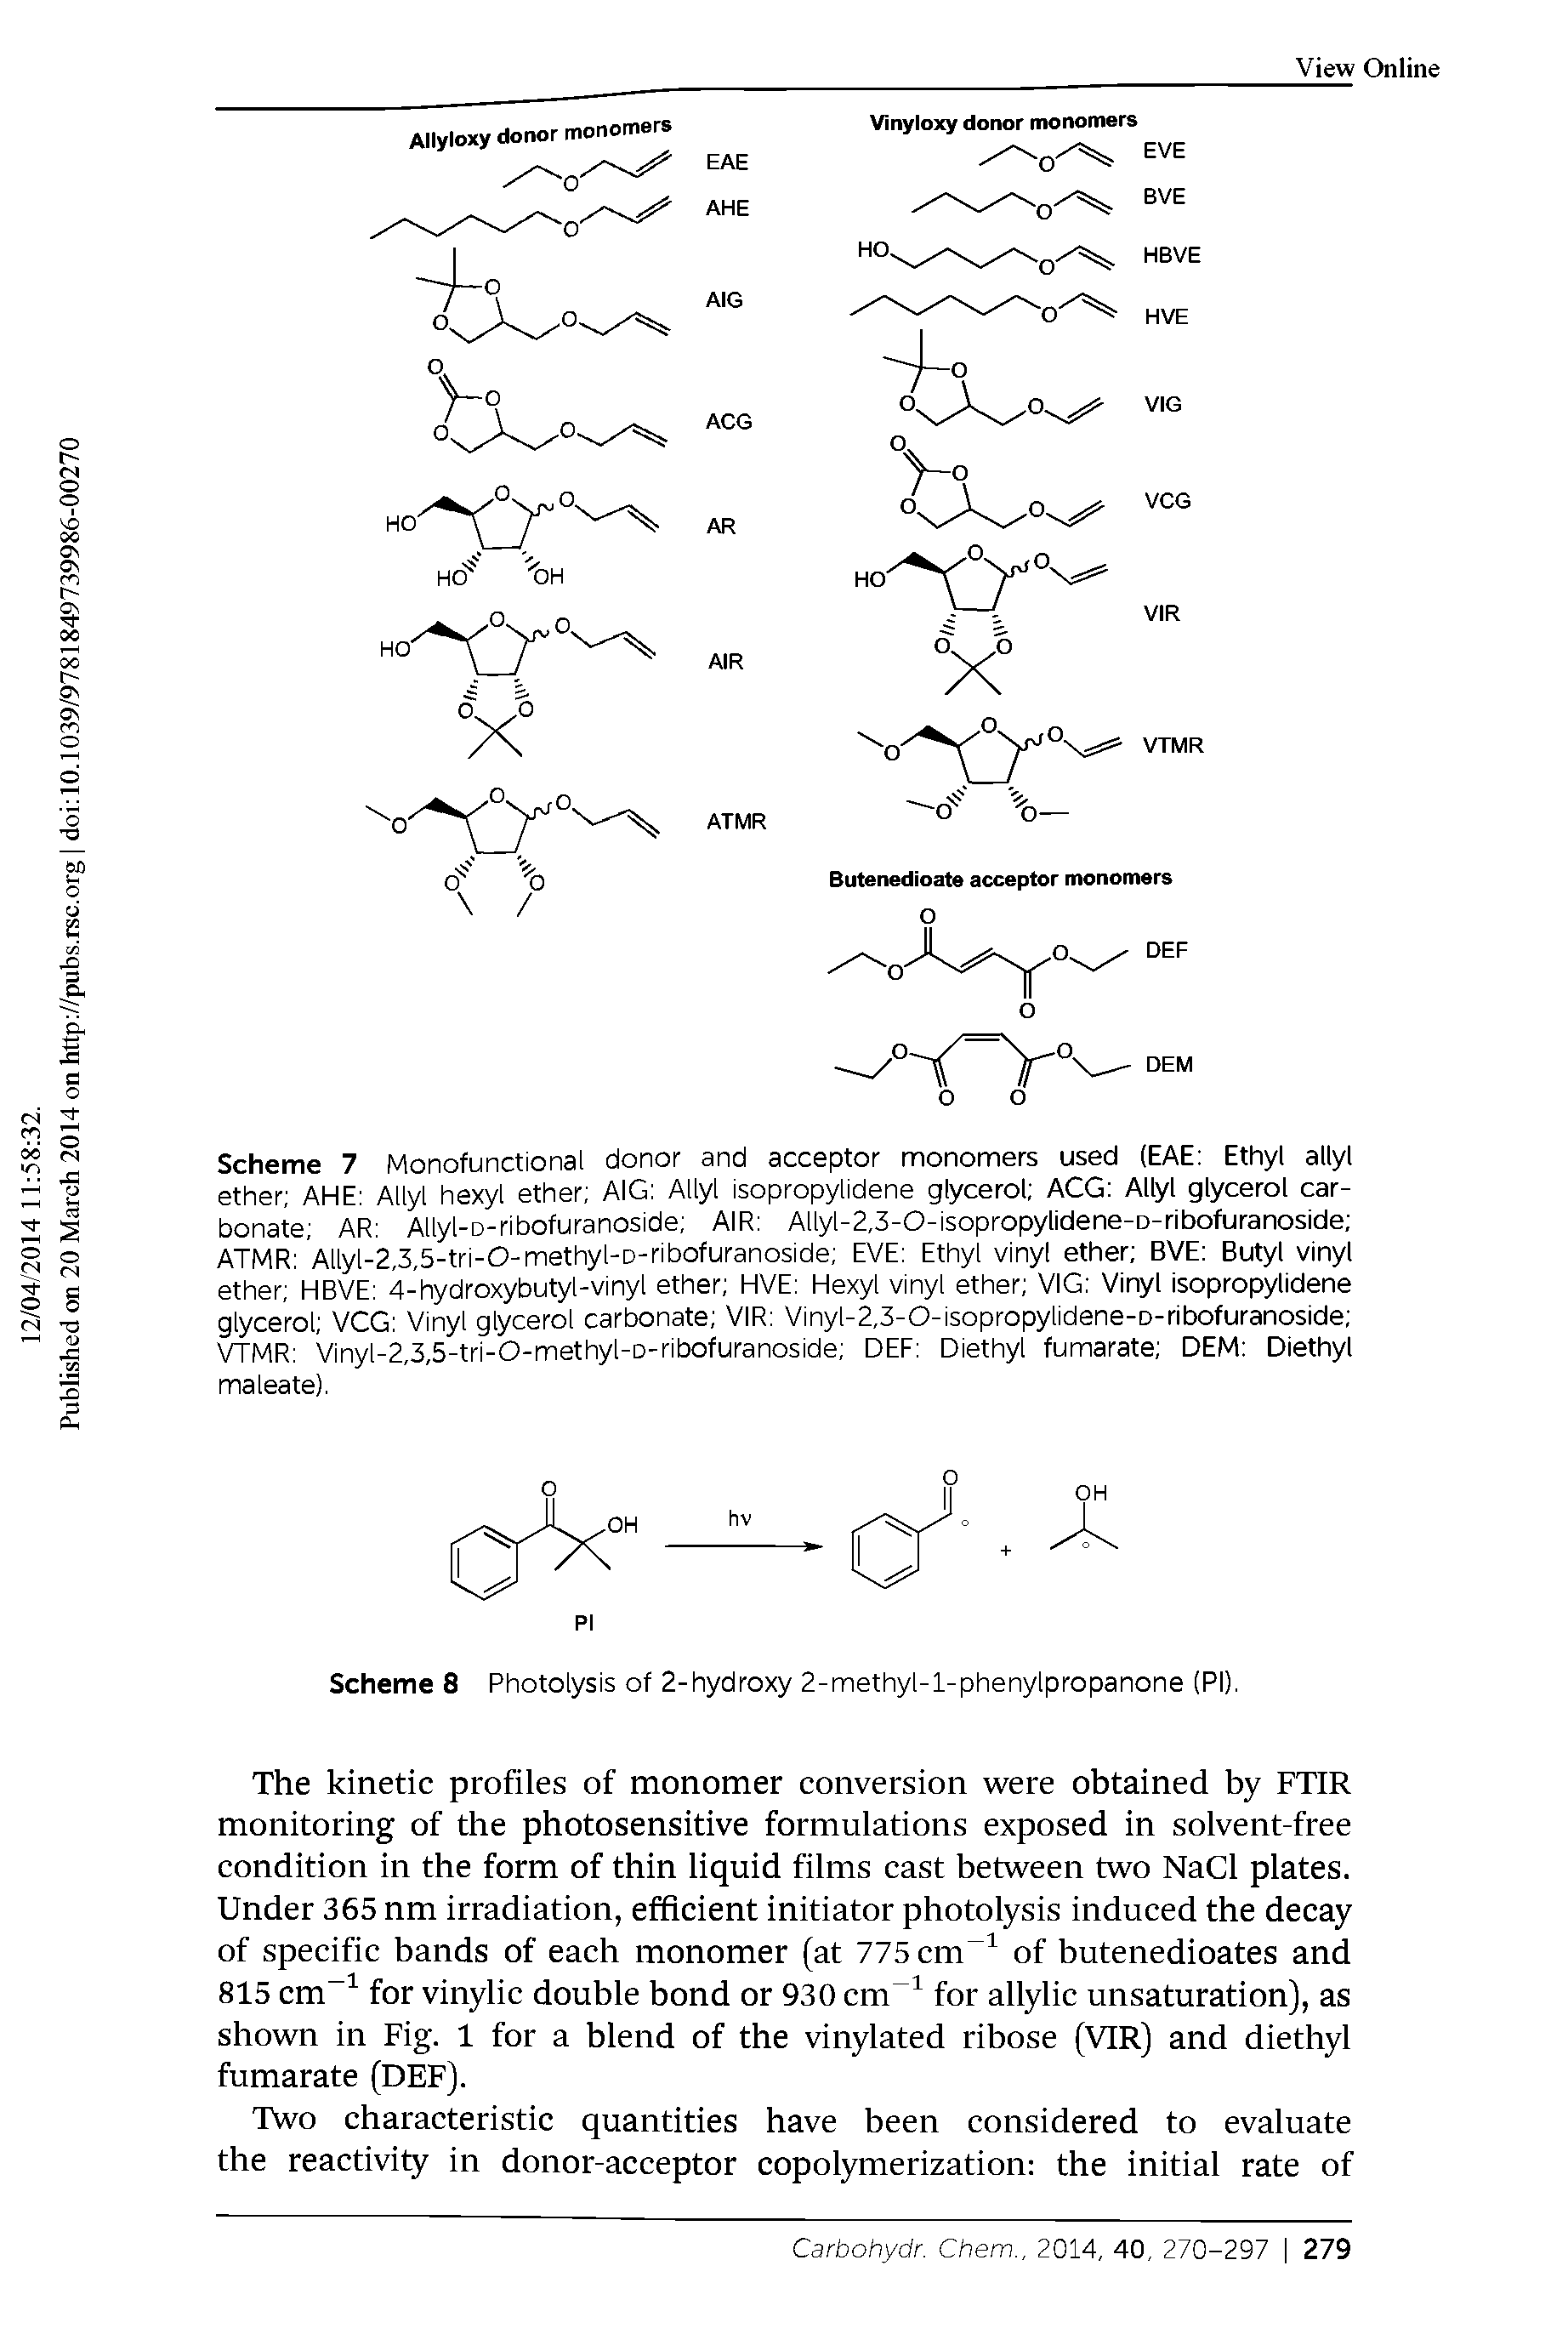 Scheme 7 Monofunctional donor and acceptor monomers used (EAE Ethyl allyl ether AHE Allyl hexyl ether AIG Allyl isopropylidene glycerol ACG Allyl glycerol carbonate AR Allyl-D-ribofuranoside AIR Allyl-2,3-0-isopropylidene-D-ribofuranoside ATMR Allyl-2,3,5-tri-0-methyl-D-ribofuranoside EVE Ethyl vinyl ether BVE Butyl vinyl ether HBVE 4-hydroxybutyl-vinyl ether HVE Hexyl vinyl ether VIG Vinyl isopropylidene glycerol VCG Vinyl glycerol carbonate VIR Vinyl-2,3-0-isopropylidene-D-ribofuranoside VTMR Vlnyl-2,3,5-tri-0-methyl-D-ribofuranoside DEF Diethyl fumarate DEM Diethyl maleate).